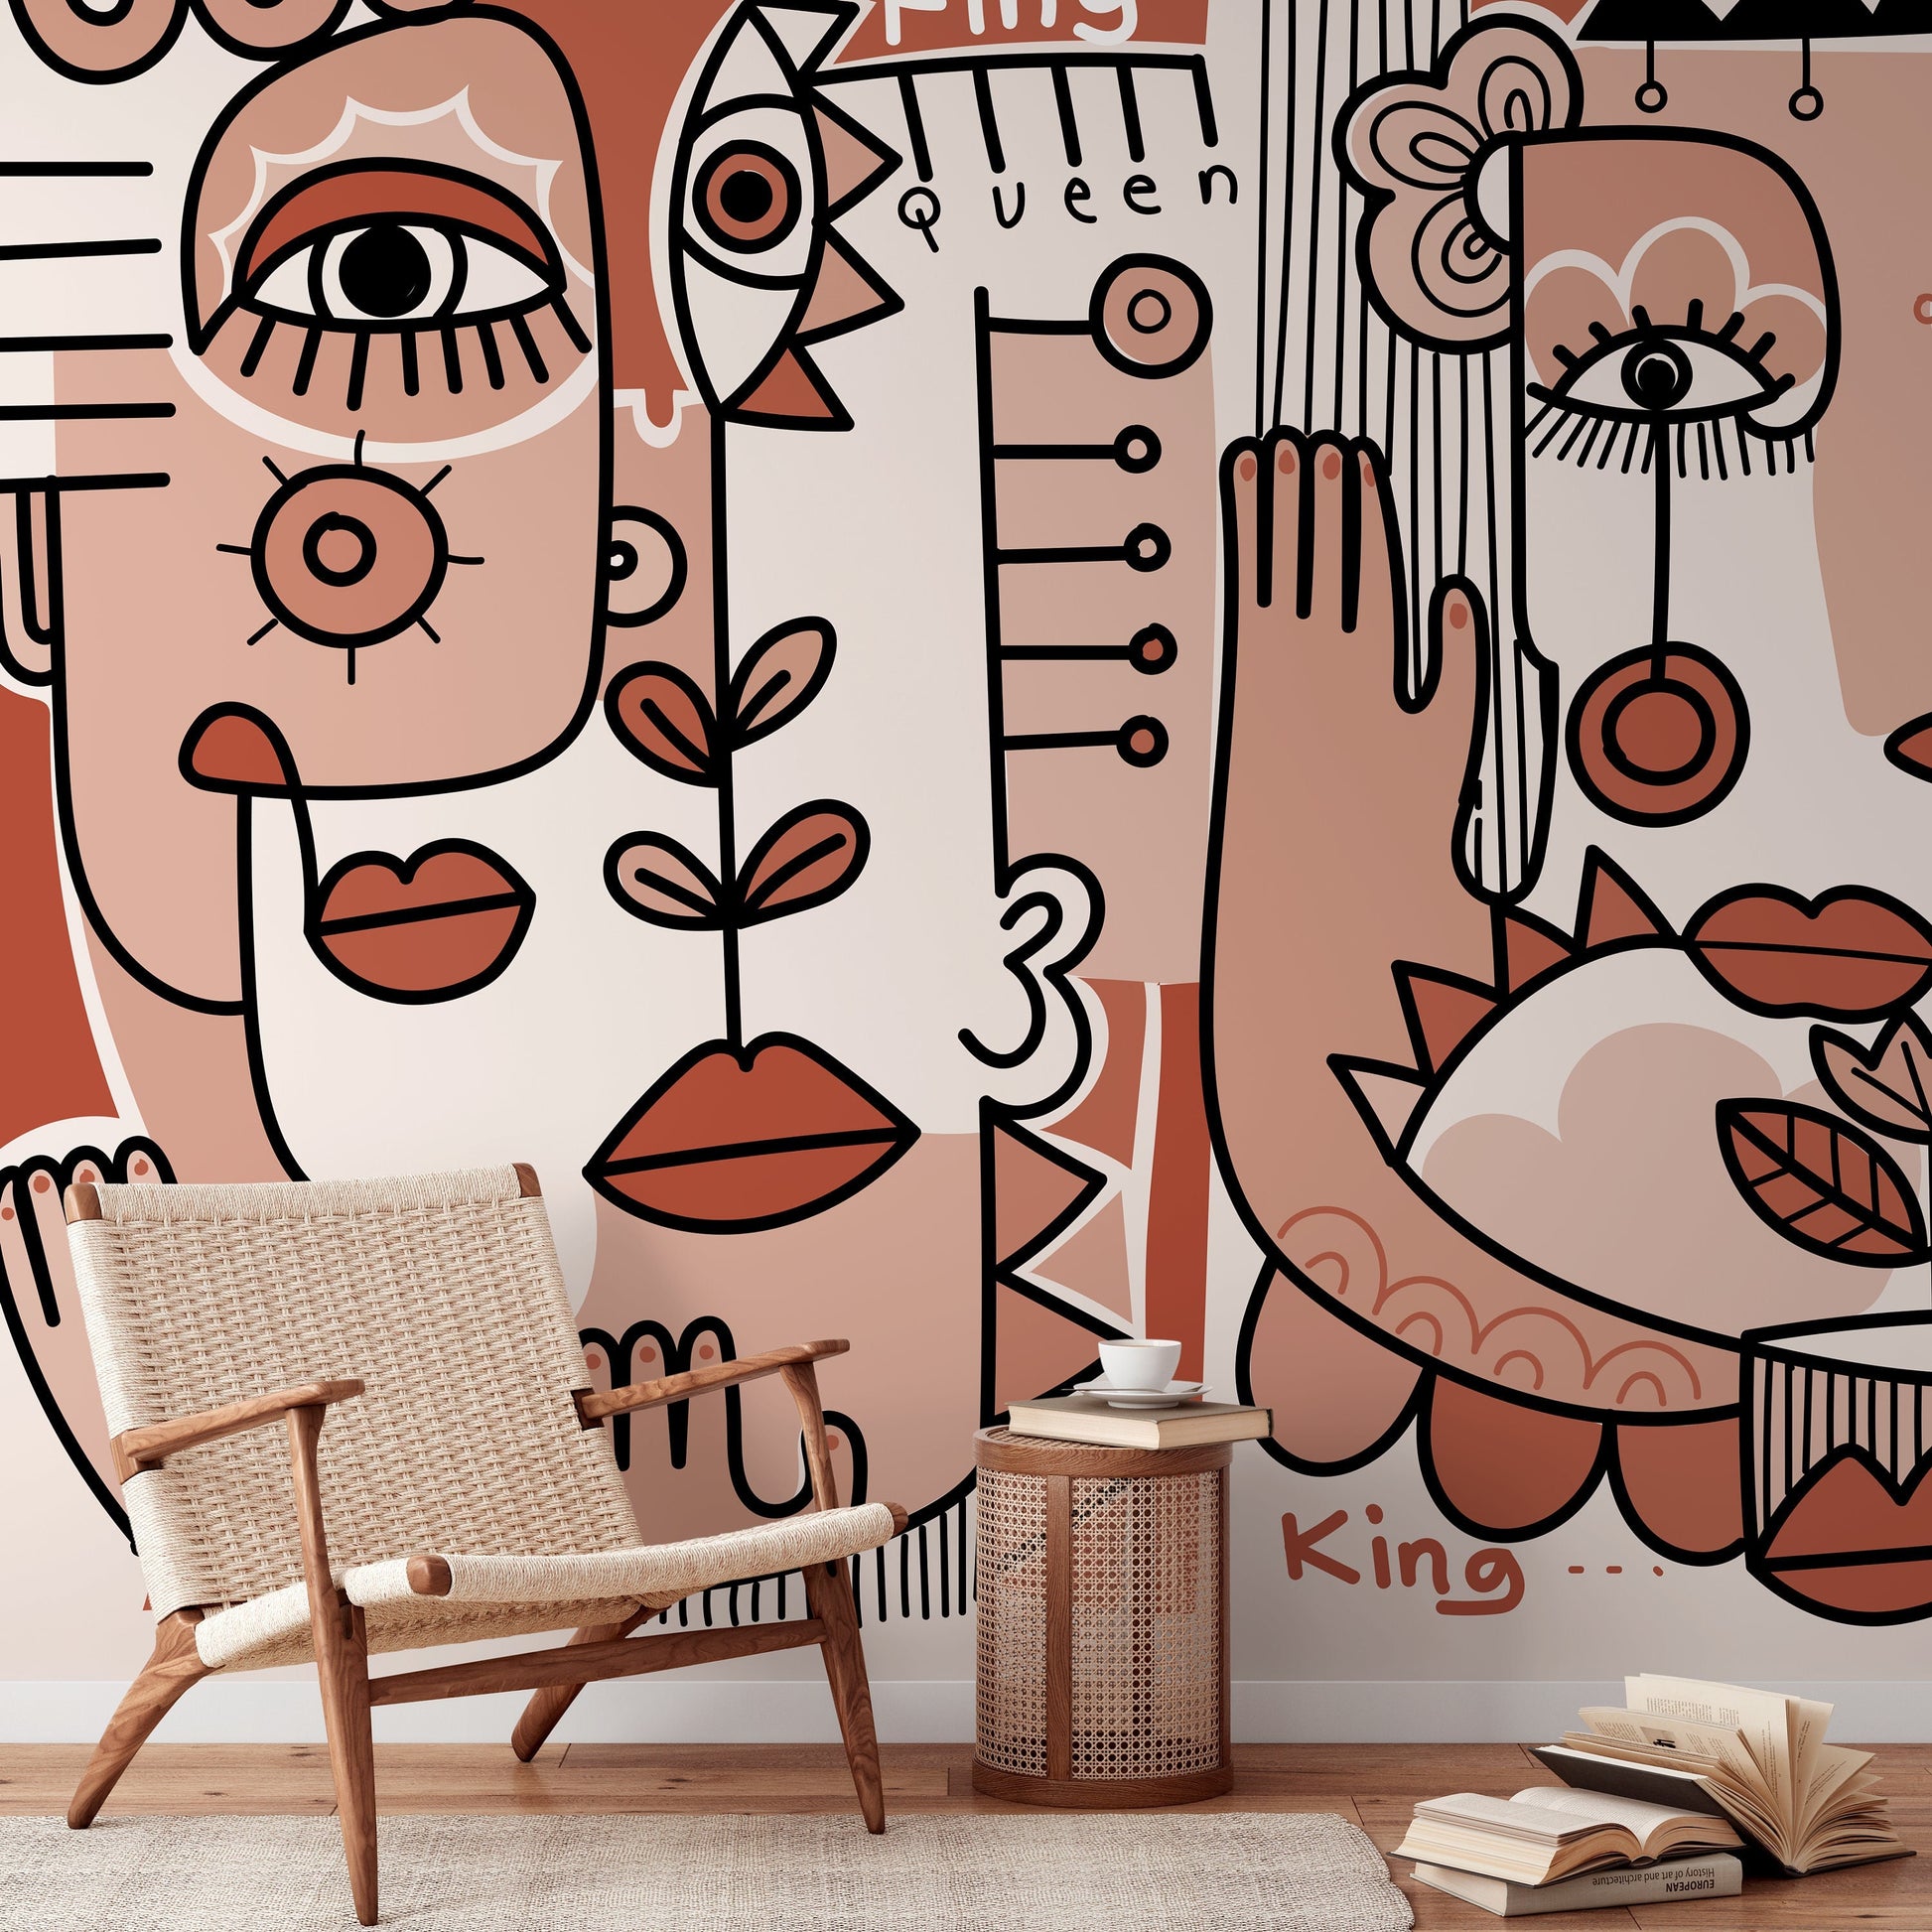 Surreal Abstract Art Mural Modern Wallpaper Peel and Stick Wallpaper Home Decor - D599